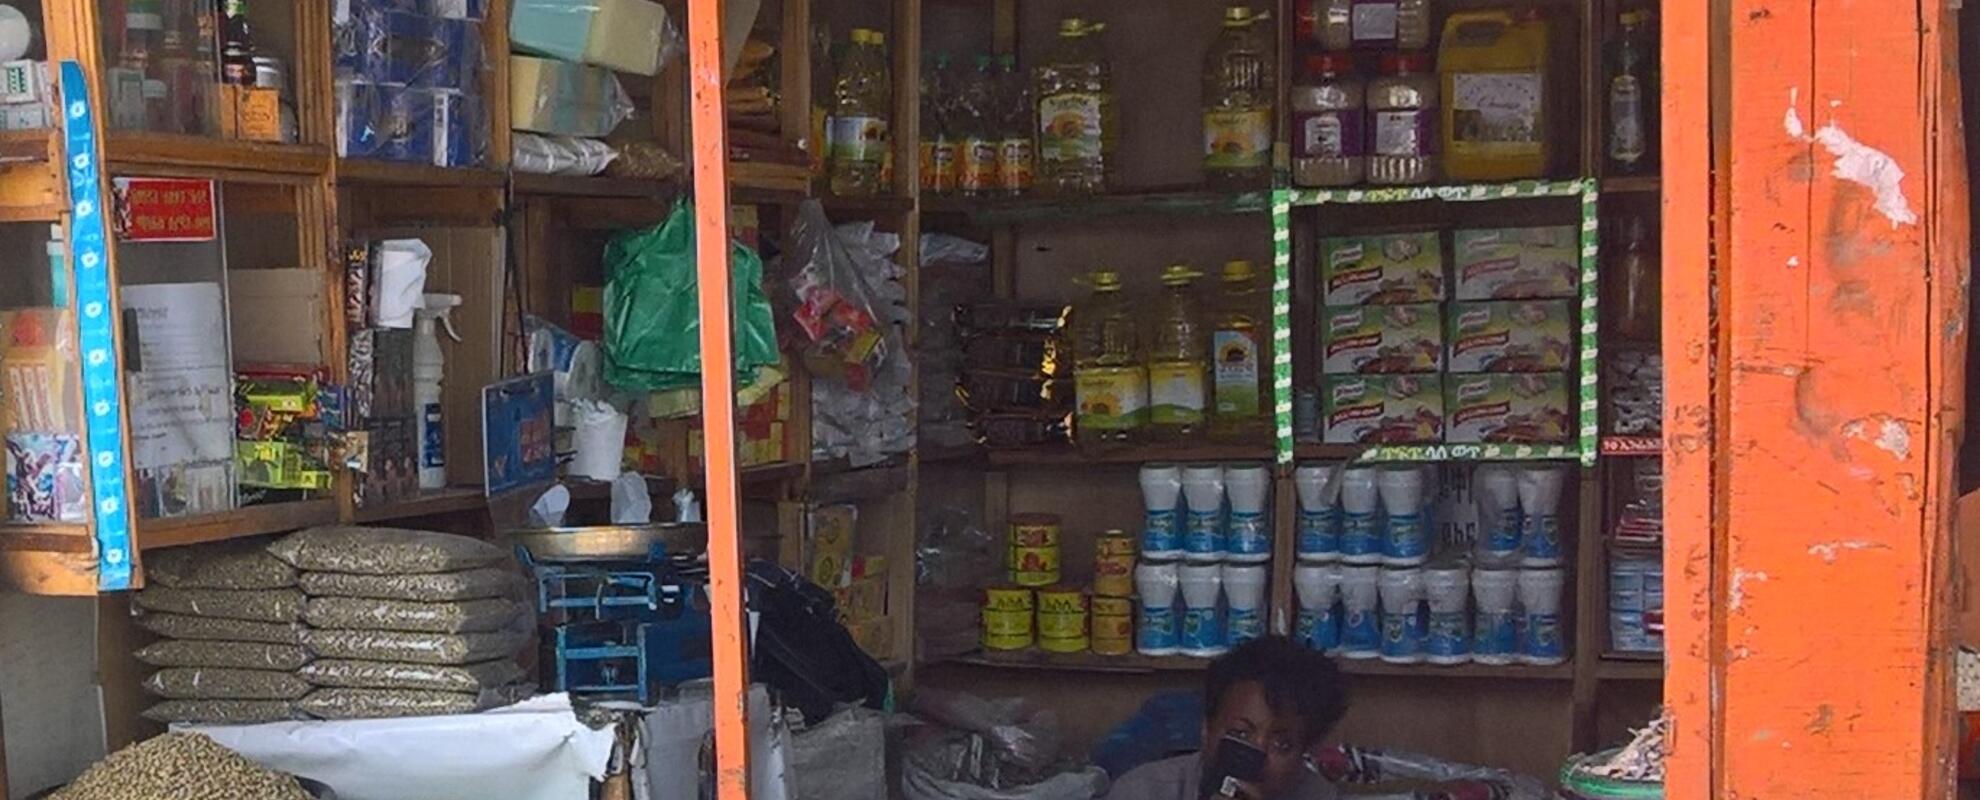 Local food shop in Addis Ababa, Ethiopia